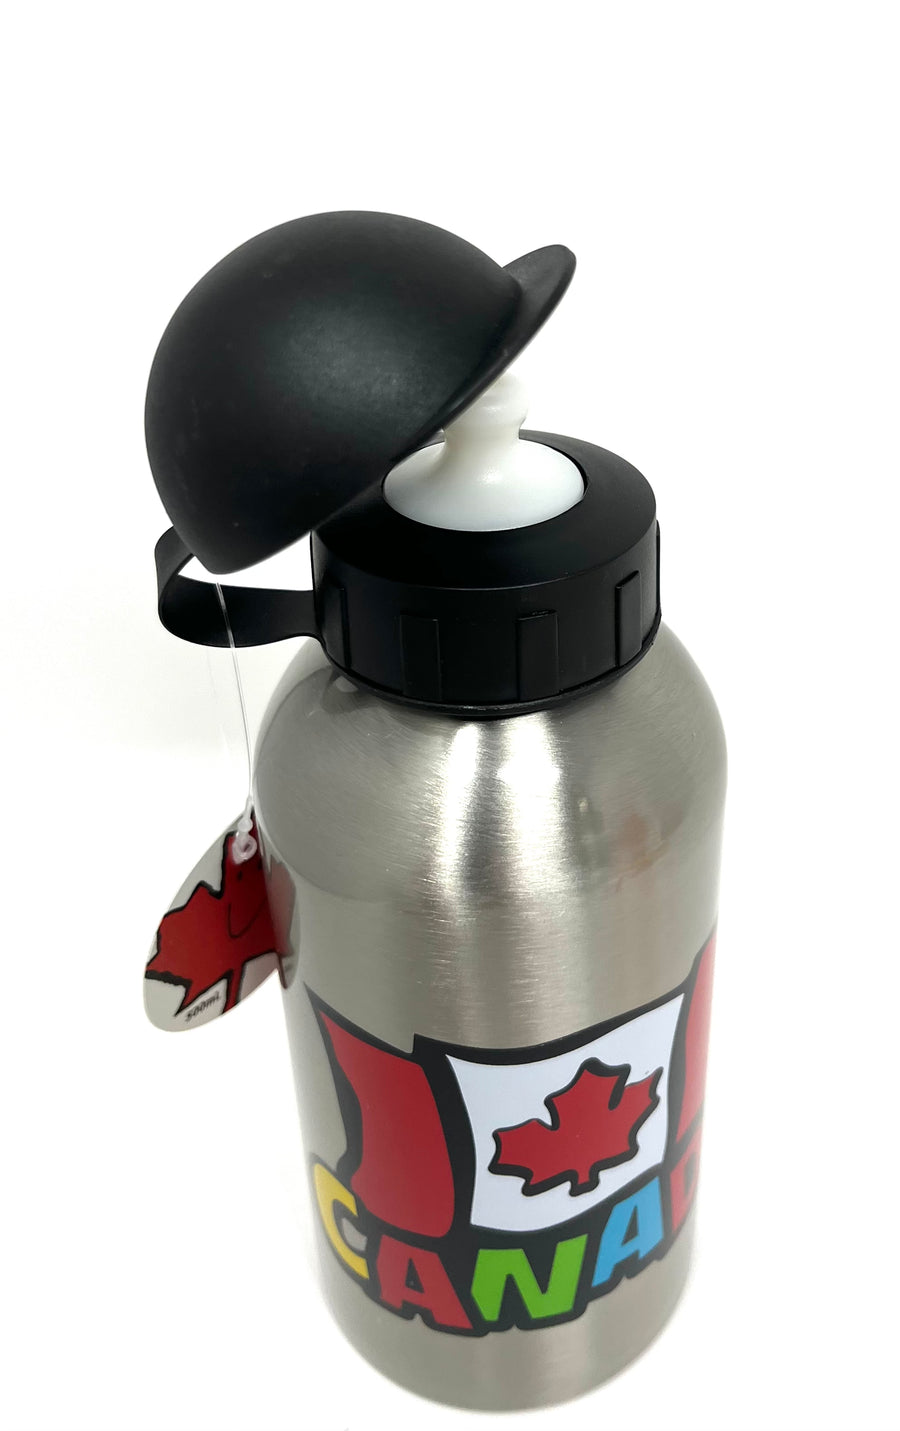 Fun Canada Flag Water Bottle